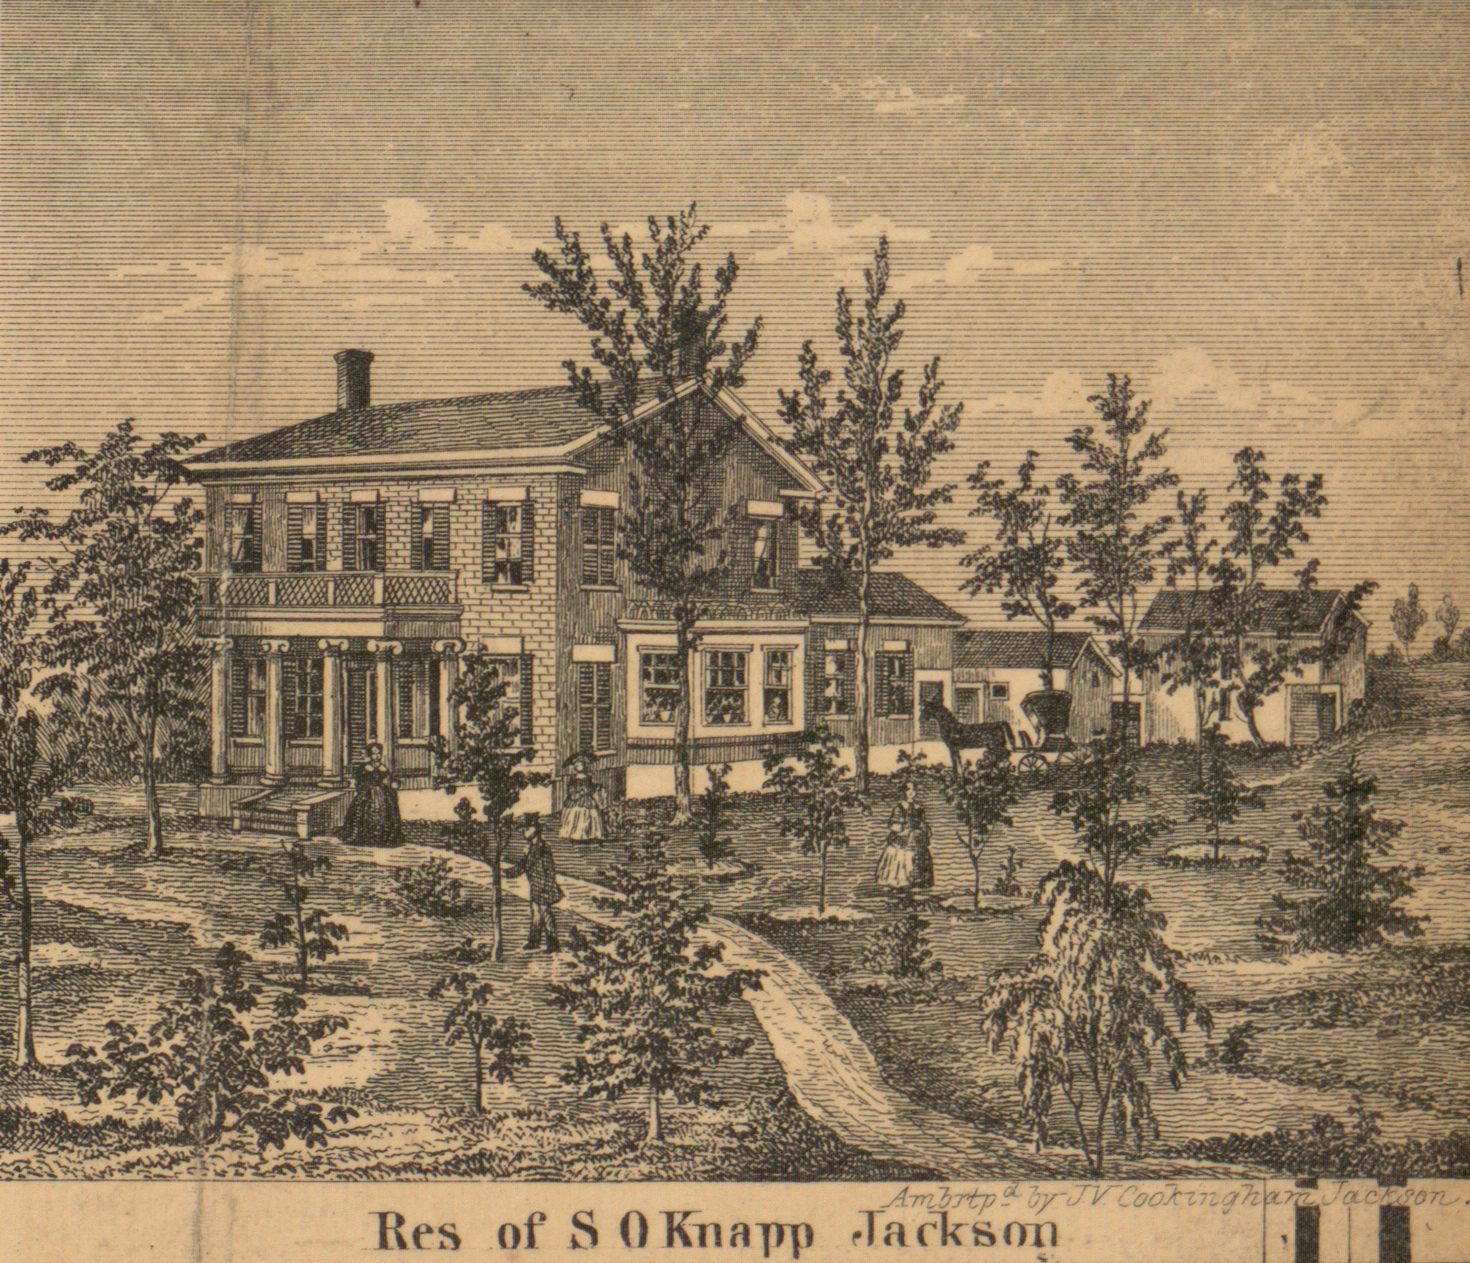 S.O. Knapp, Jackson, Jackson 1858